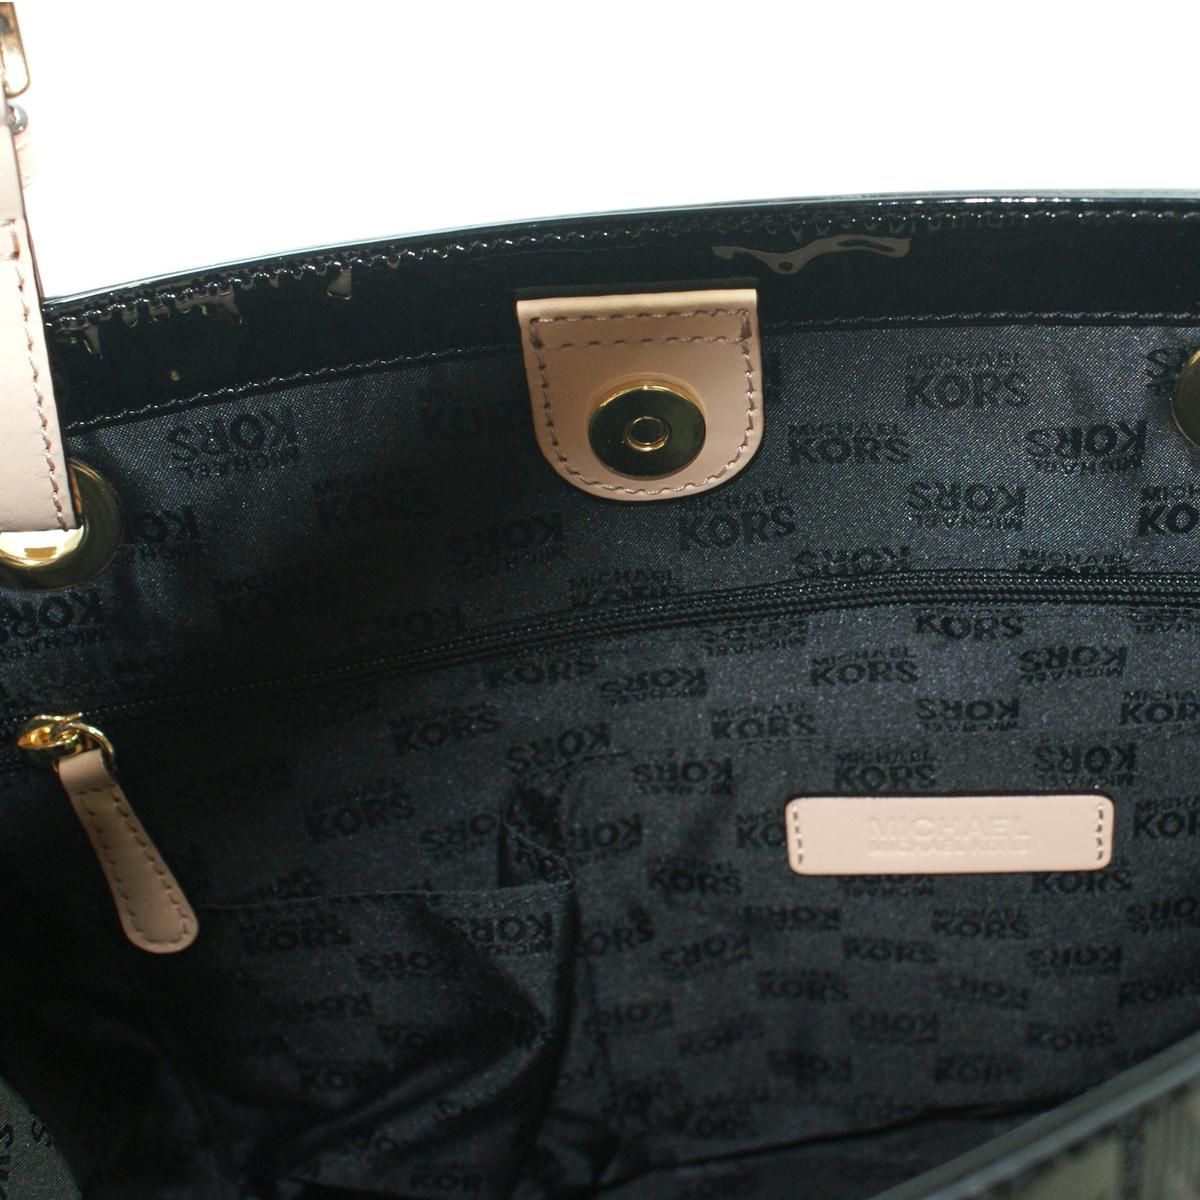 black patent leather michael kors purse